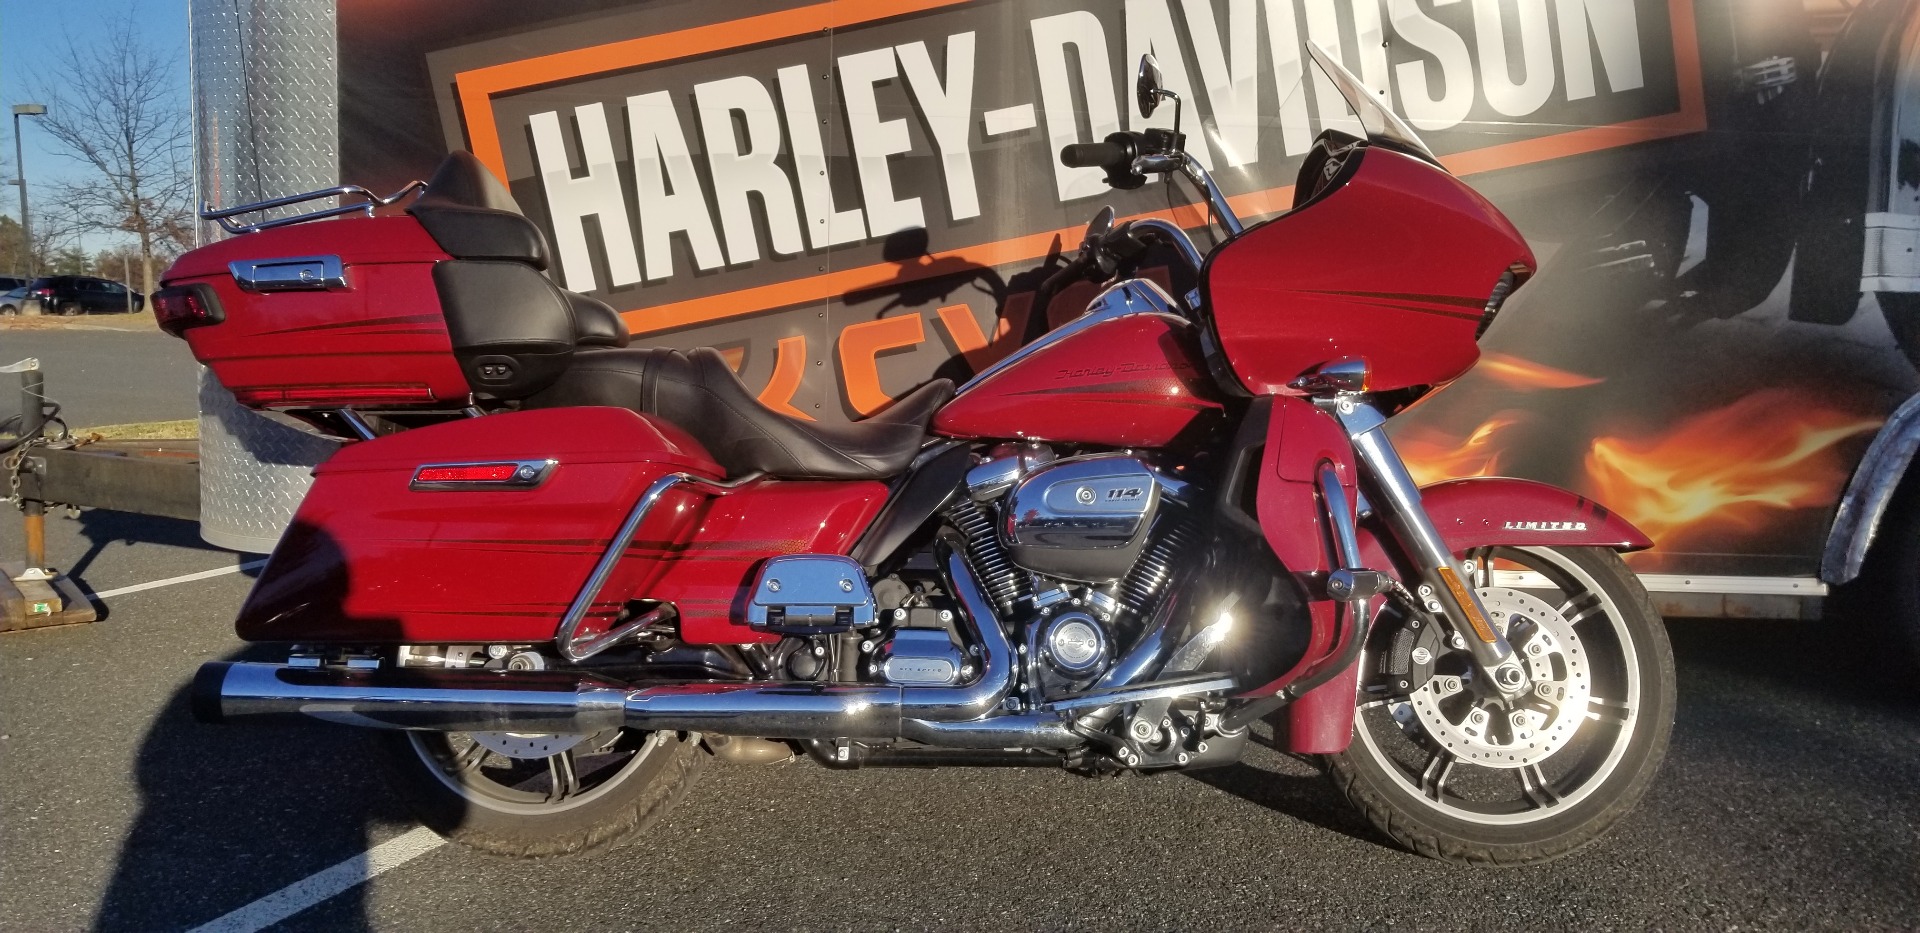 2020 Harley-Davidson Road Glide® Limited in Fredericksburg, Virginia - Photo 1